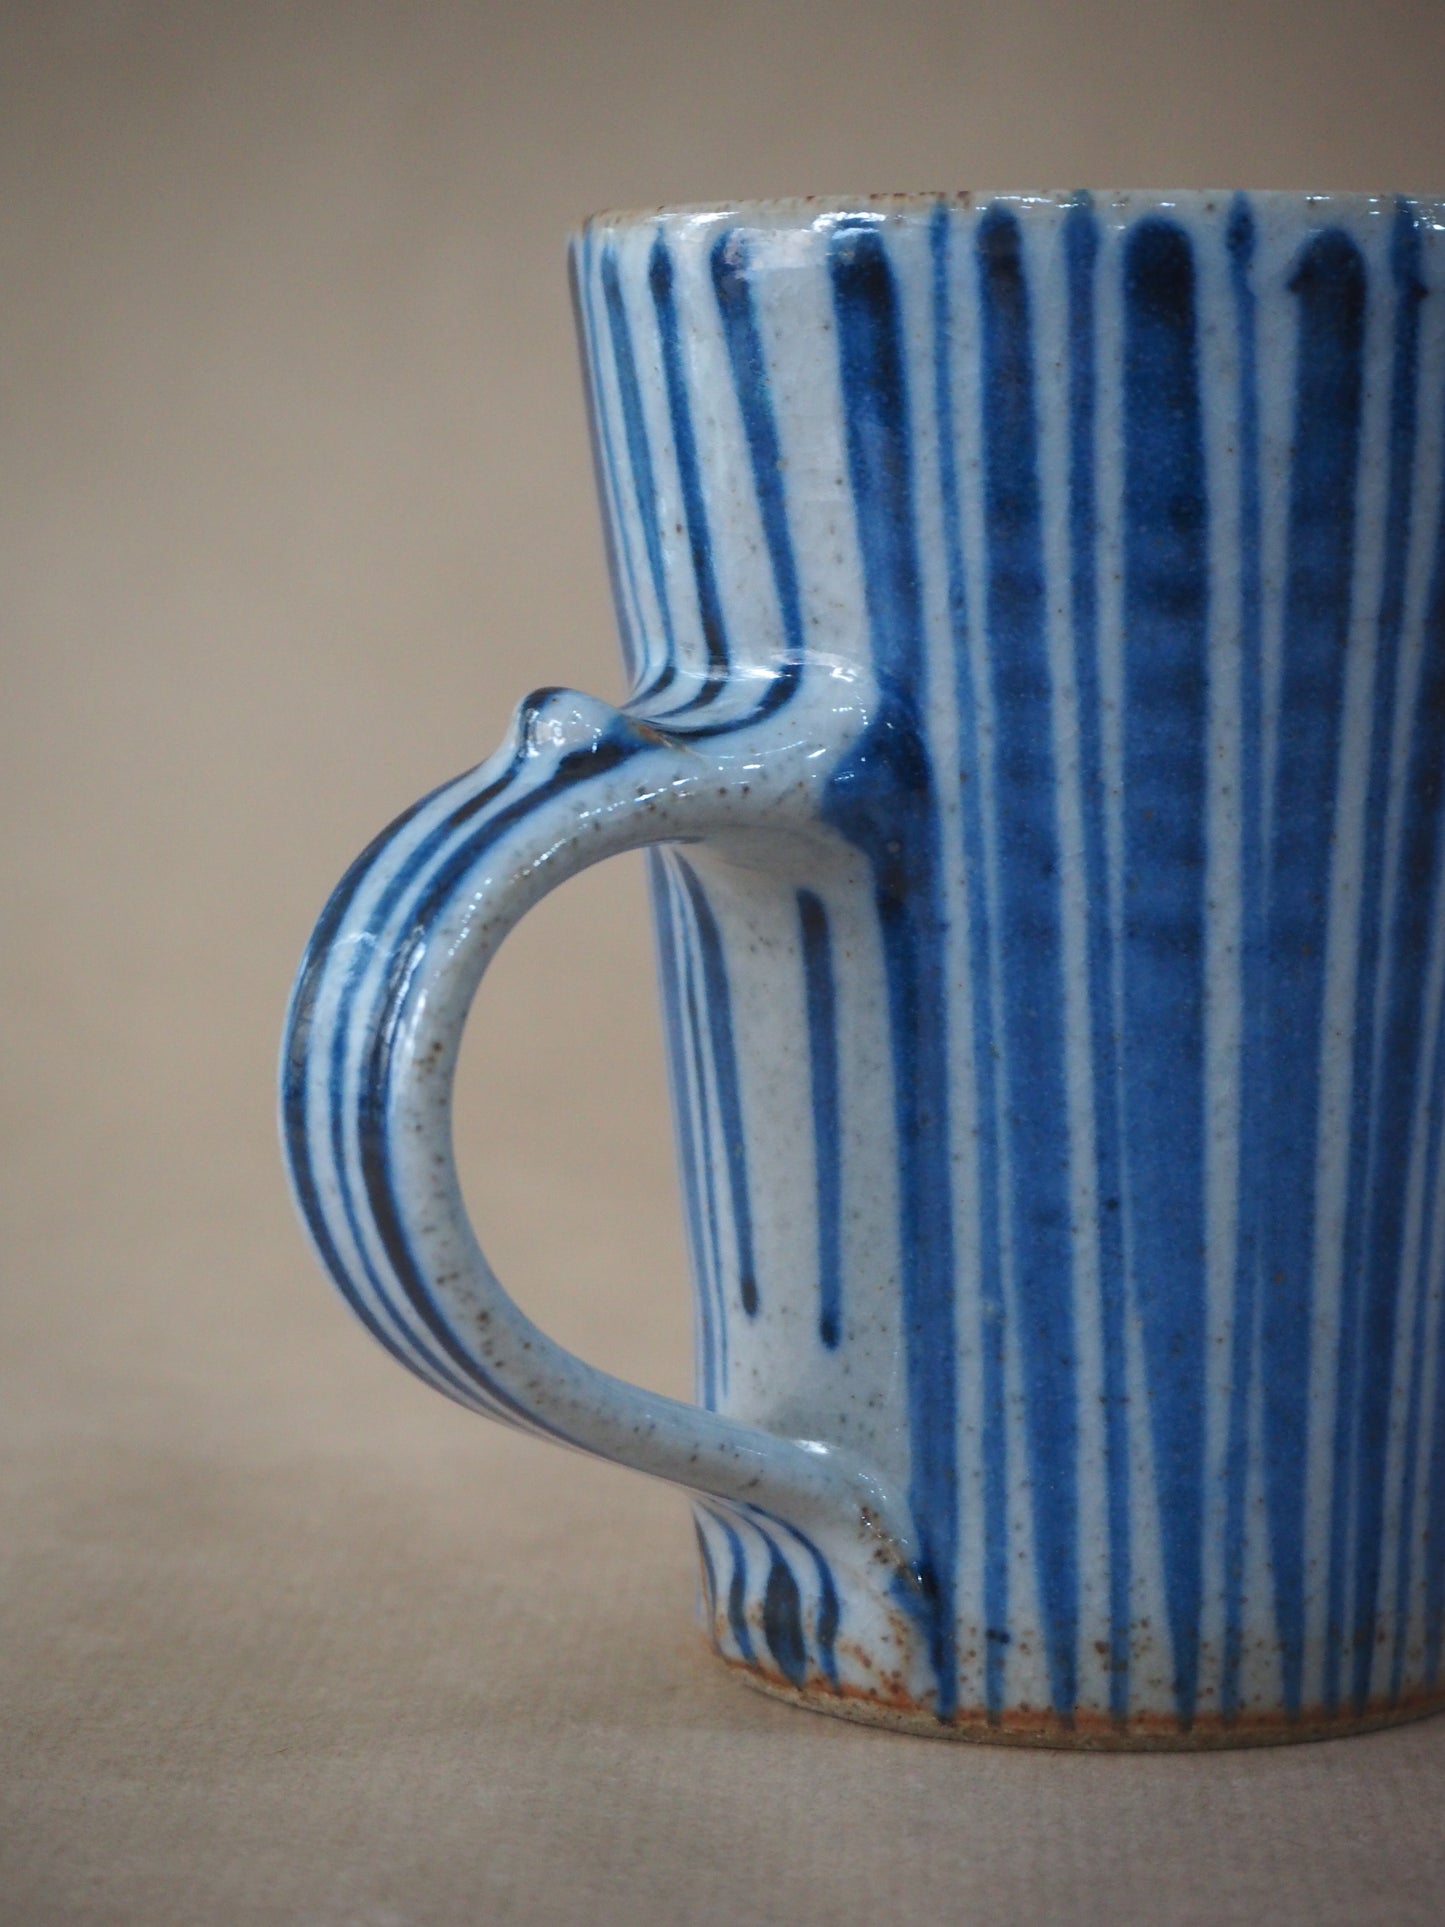 Goldsmith, Robert – Tall Blue Pinstripe Mug